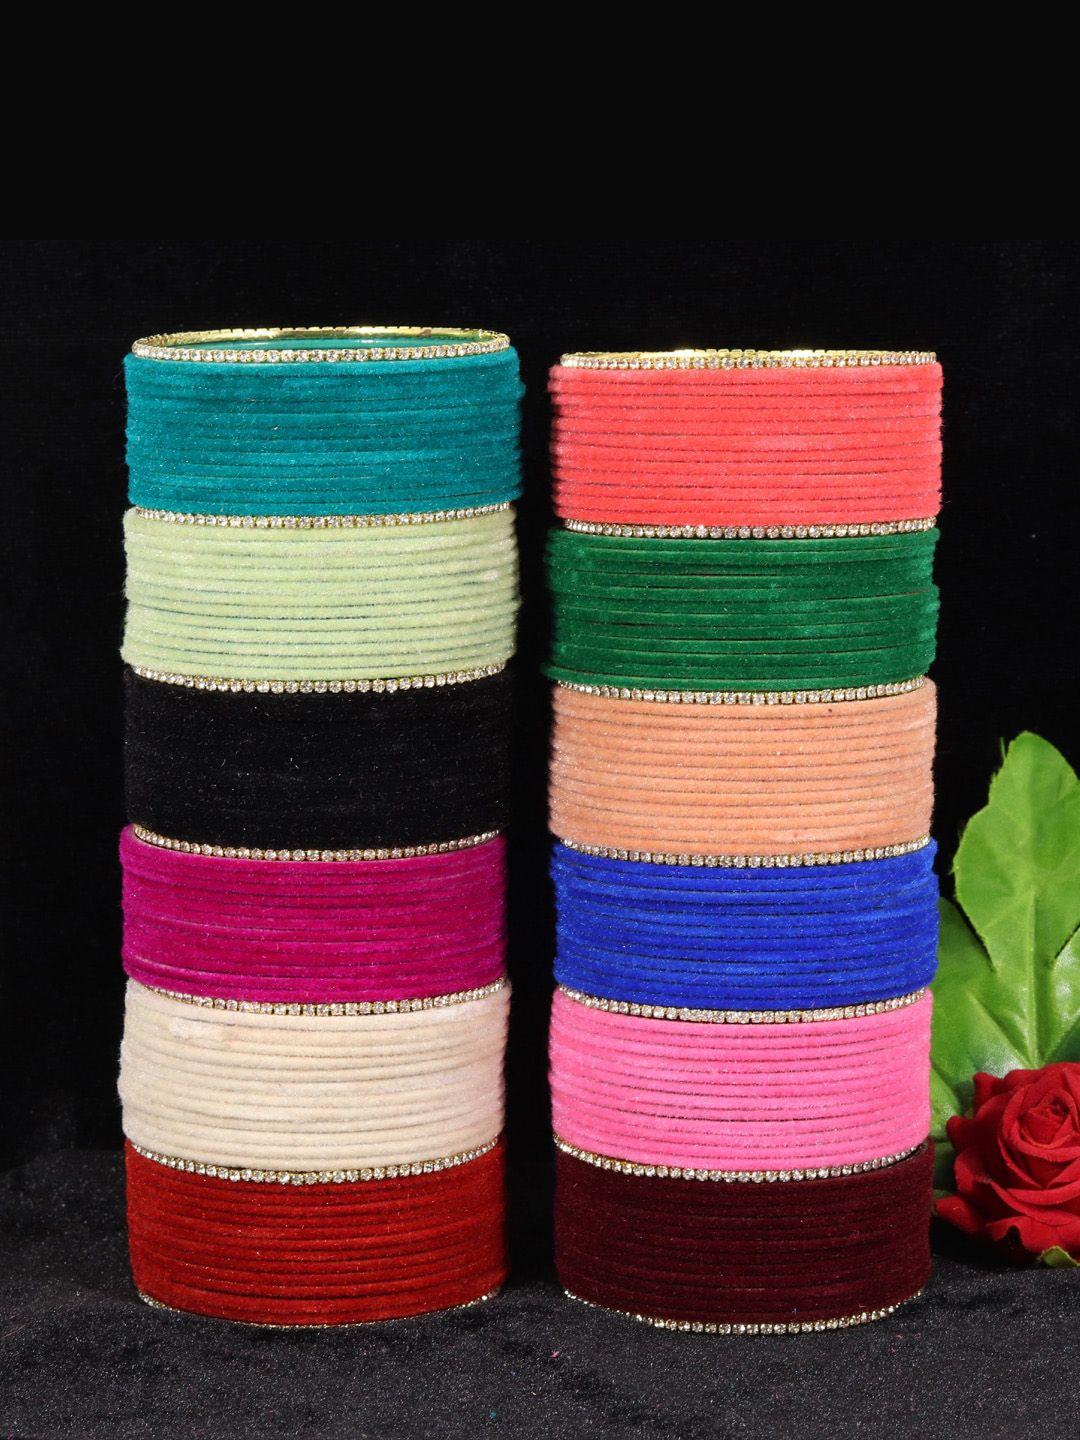 nmii set of 12 coloured velvet bangles set with 14 cz  stone studded bangles